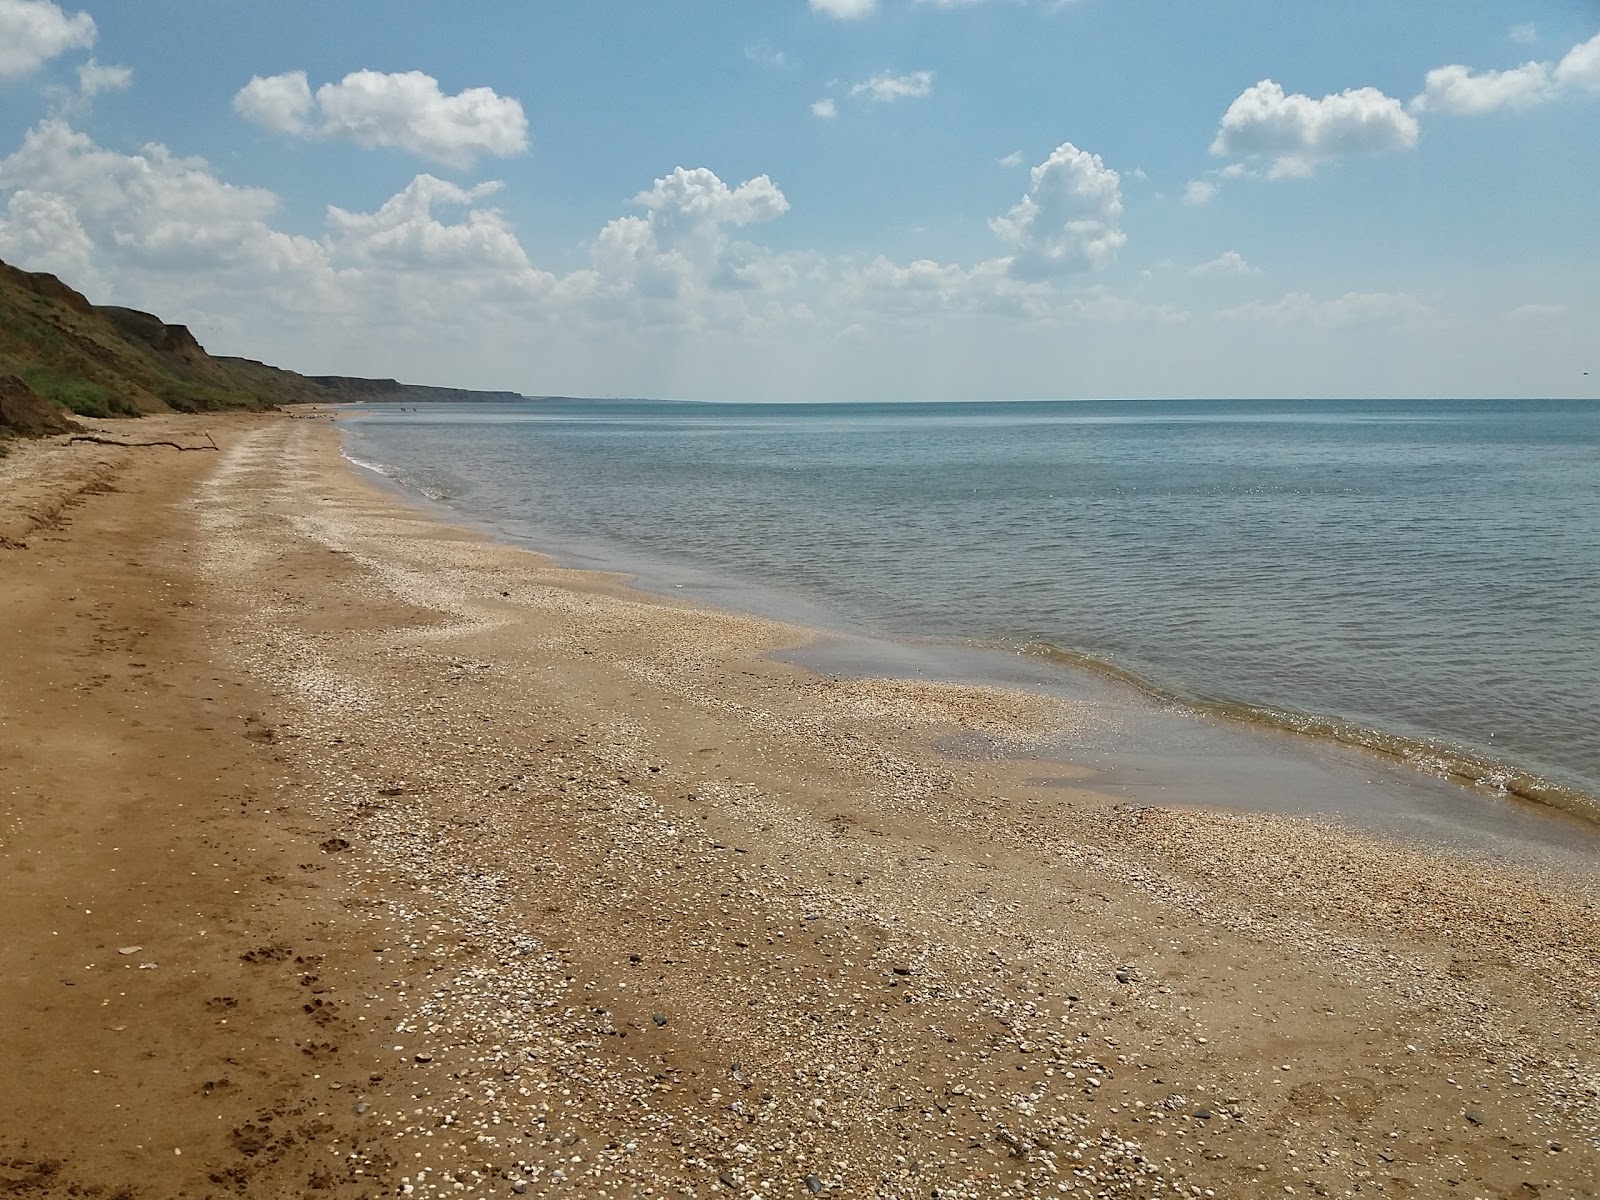 Fotografija Plazh Oazis z turkizna voda površino